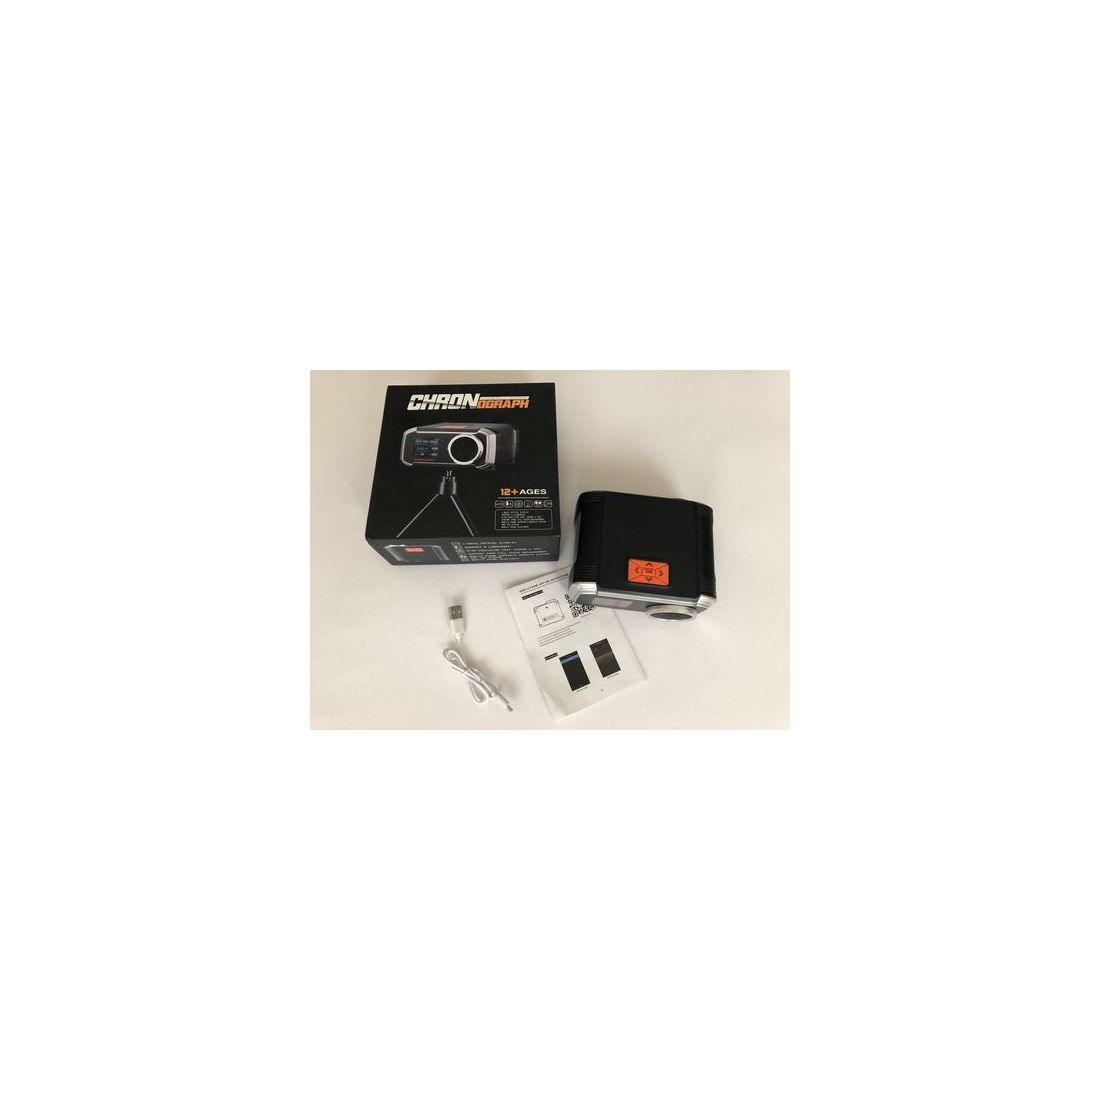 Chronograph Digital Gun BBS Speed Tester Bluetooth Airsoft APP